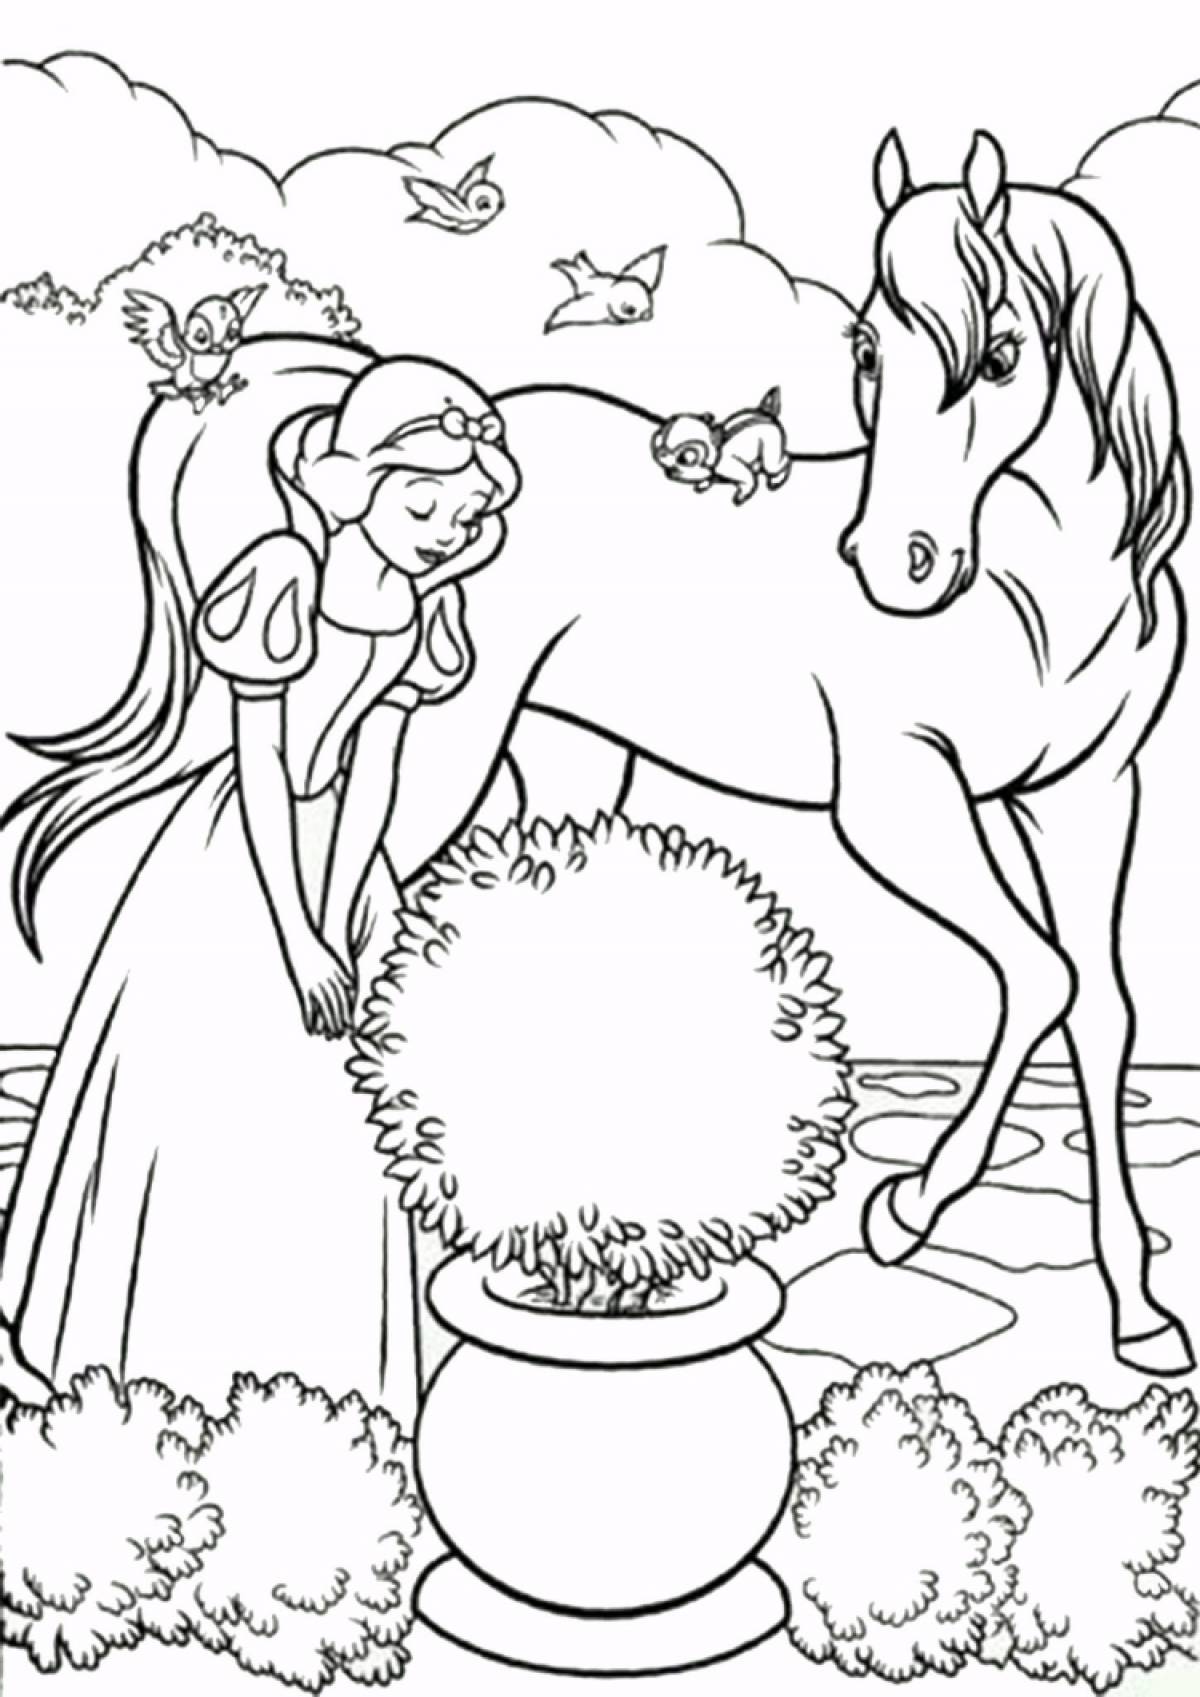 Princess on a horse #13